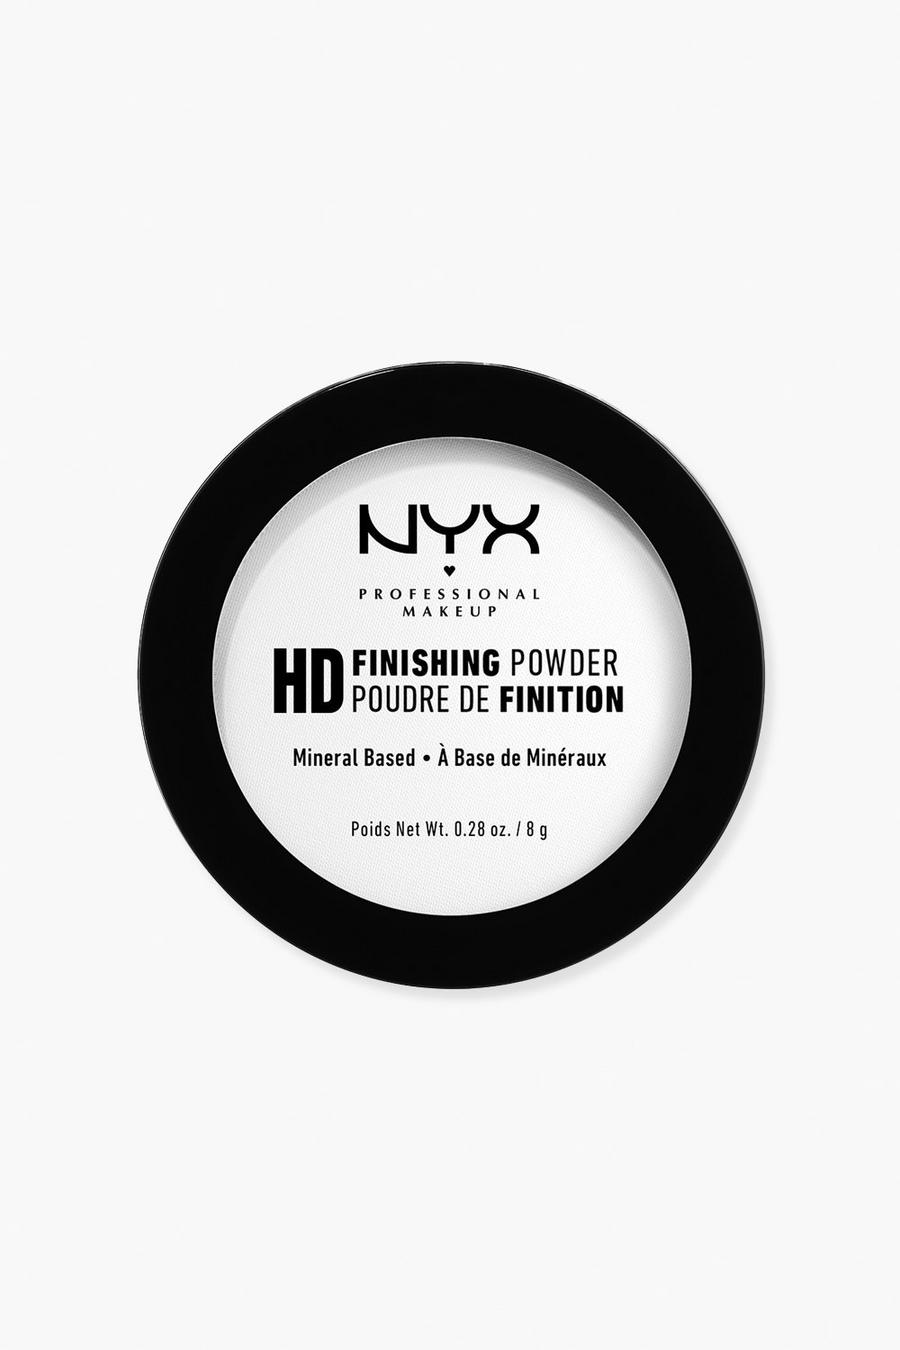 Polvos High Definition Finishing Powder de NYX Professional Makeup, 01 translucent image number 1